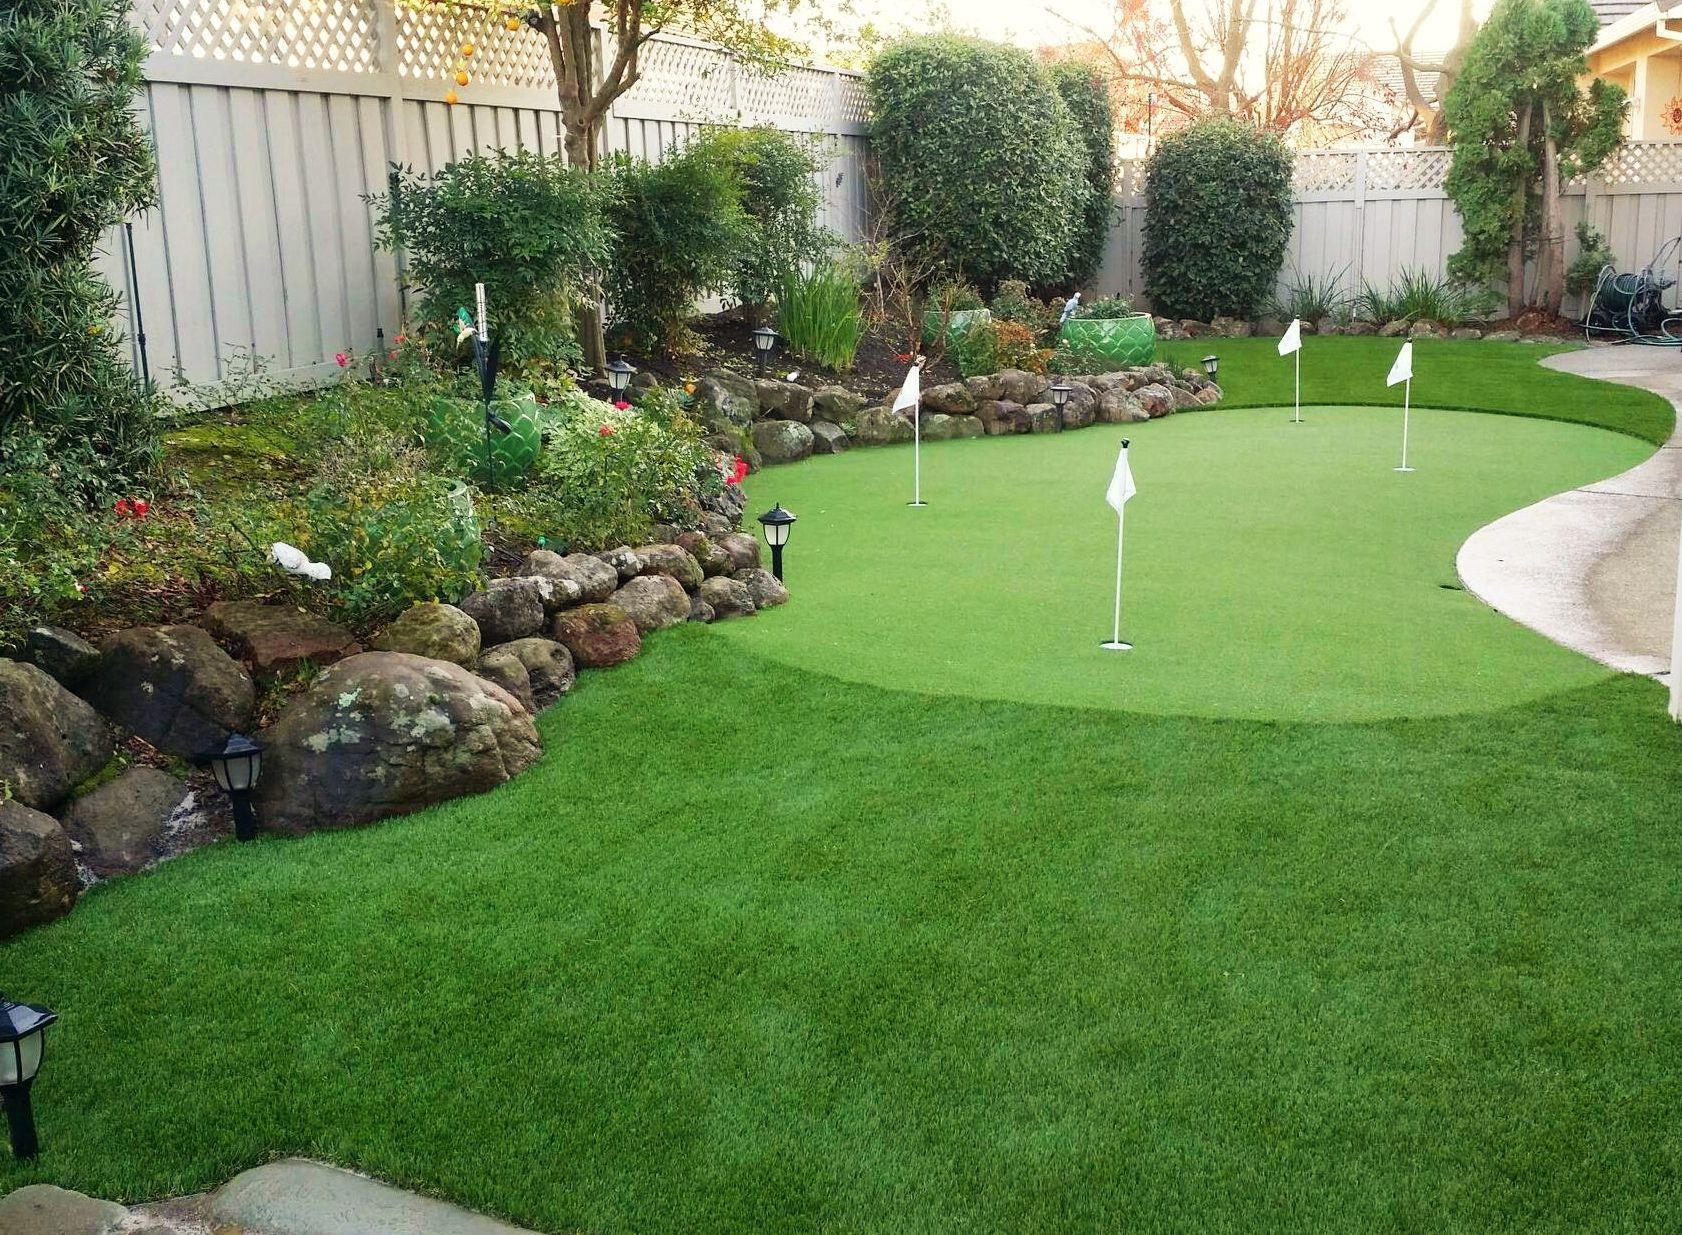 Imagine your very own backyard golf greens. We make it ...